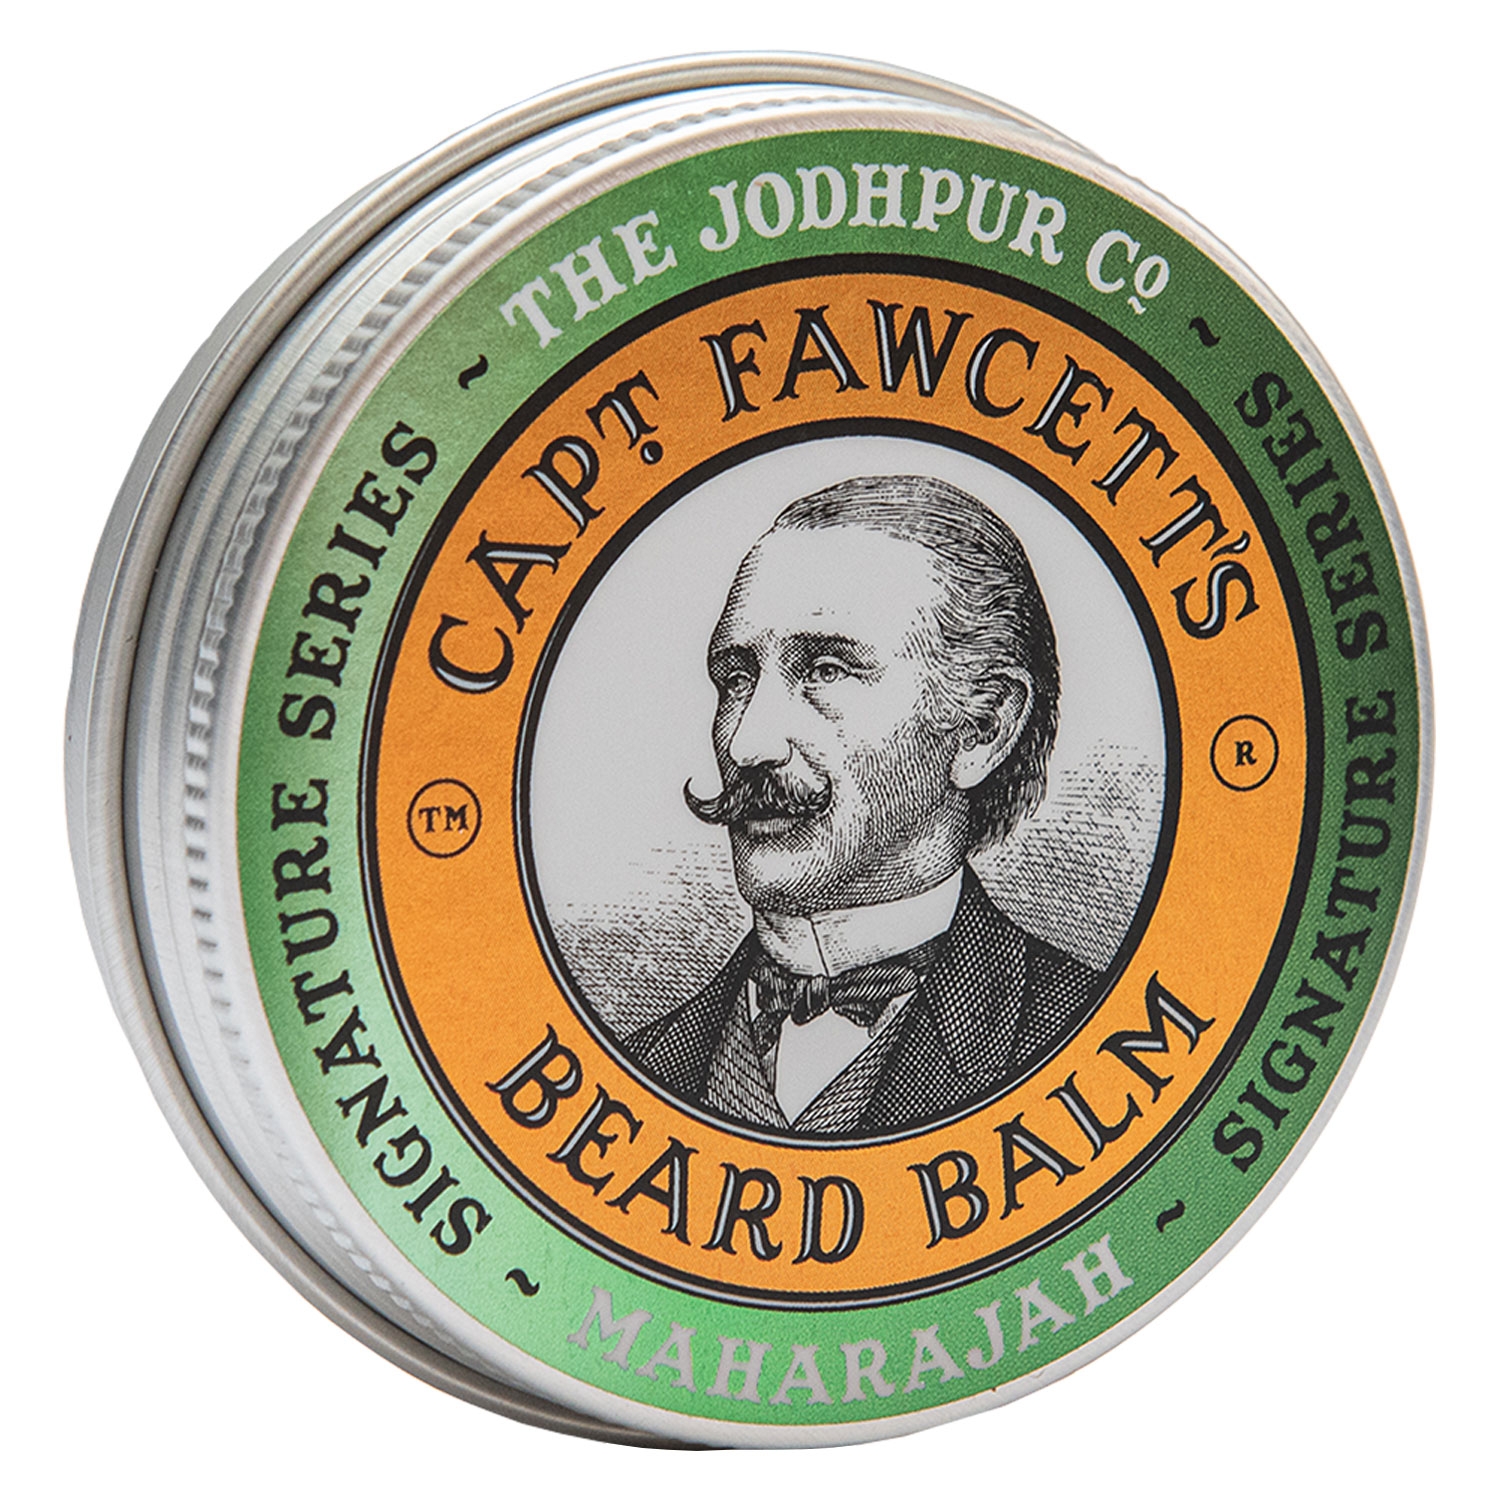 Produktbild von Capt. Fawcett Care - Maharajah Beard Balm